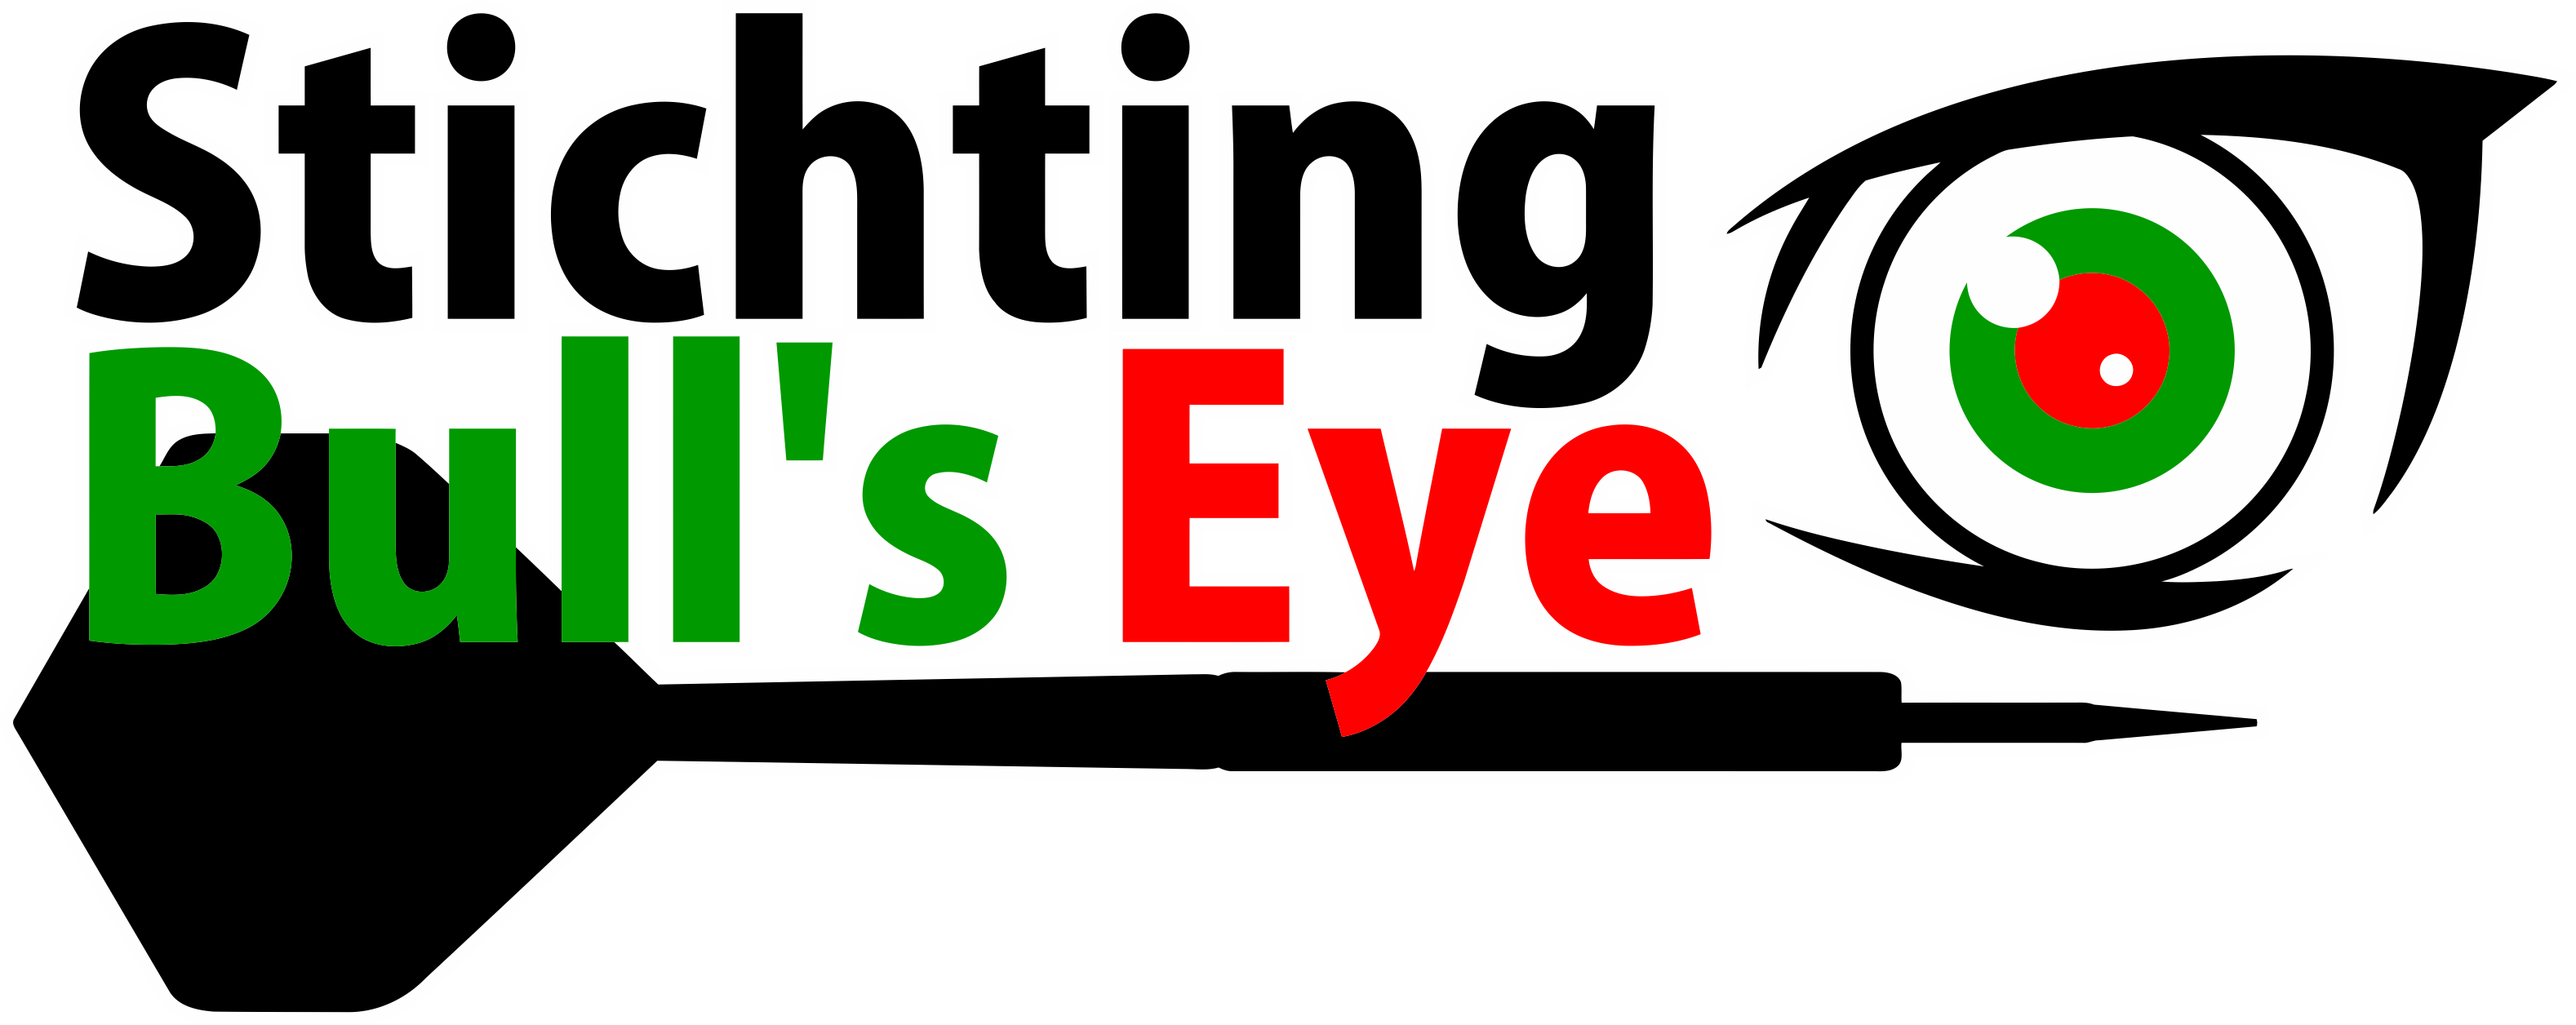 Stichting Bull's Eye